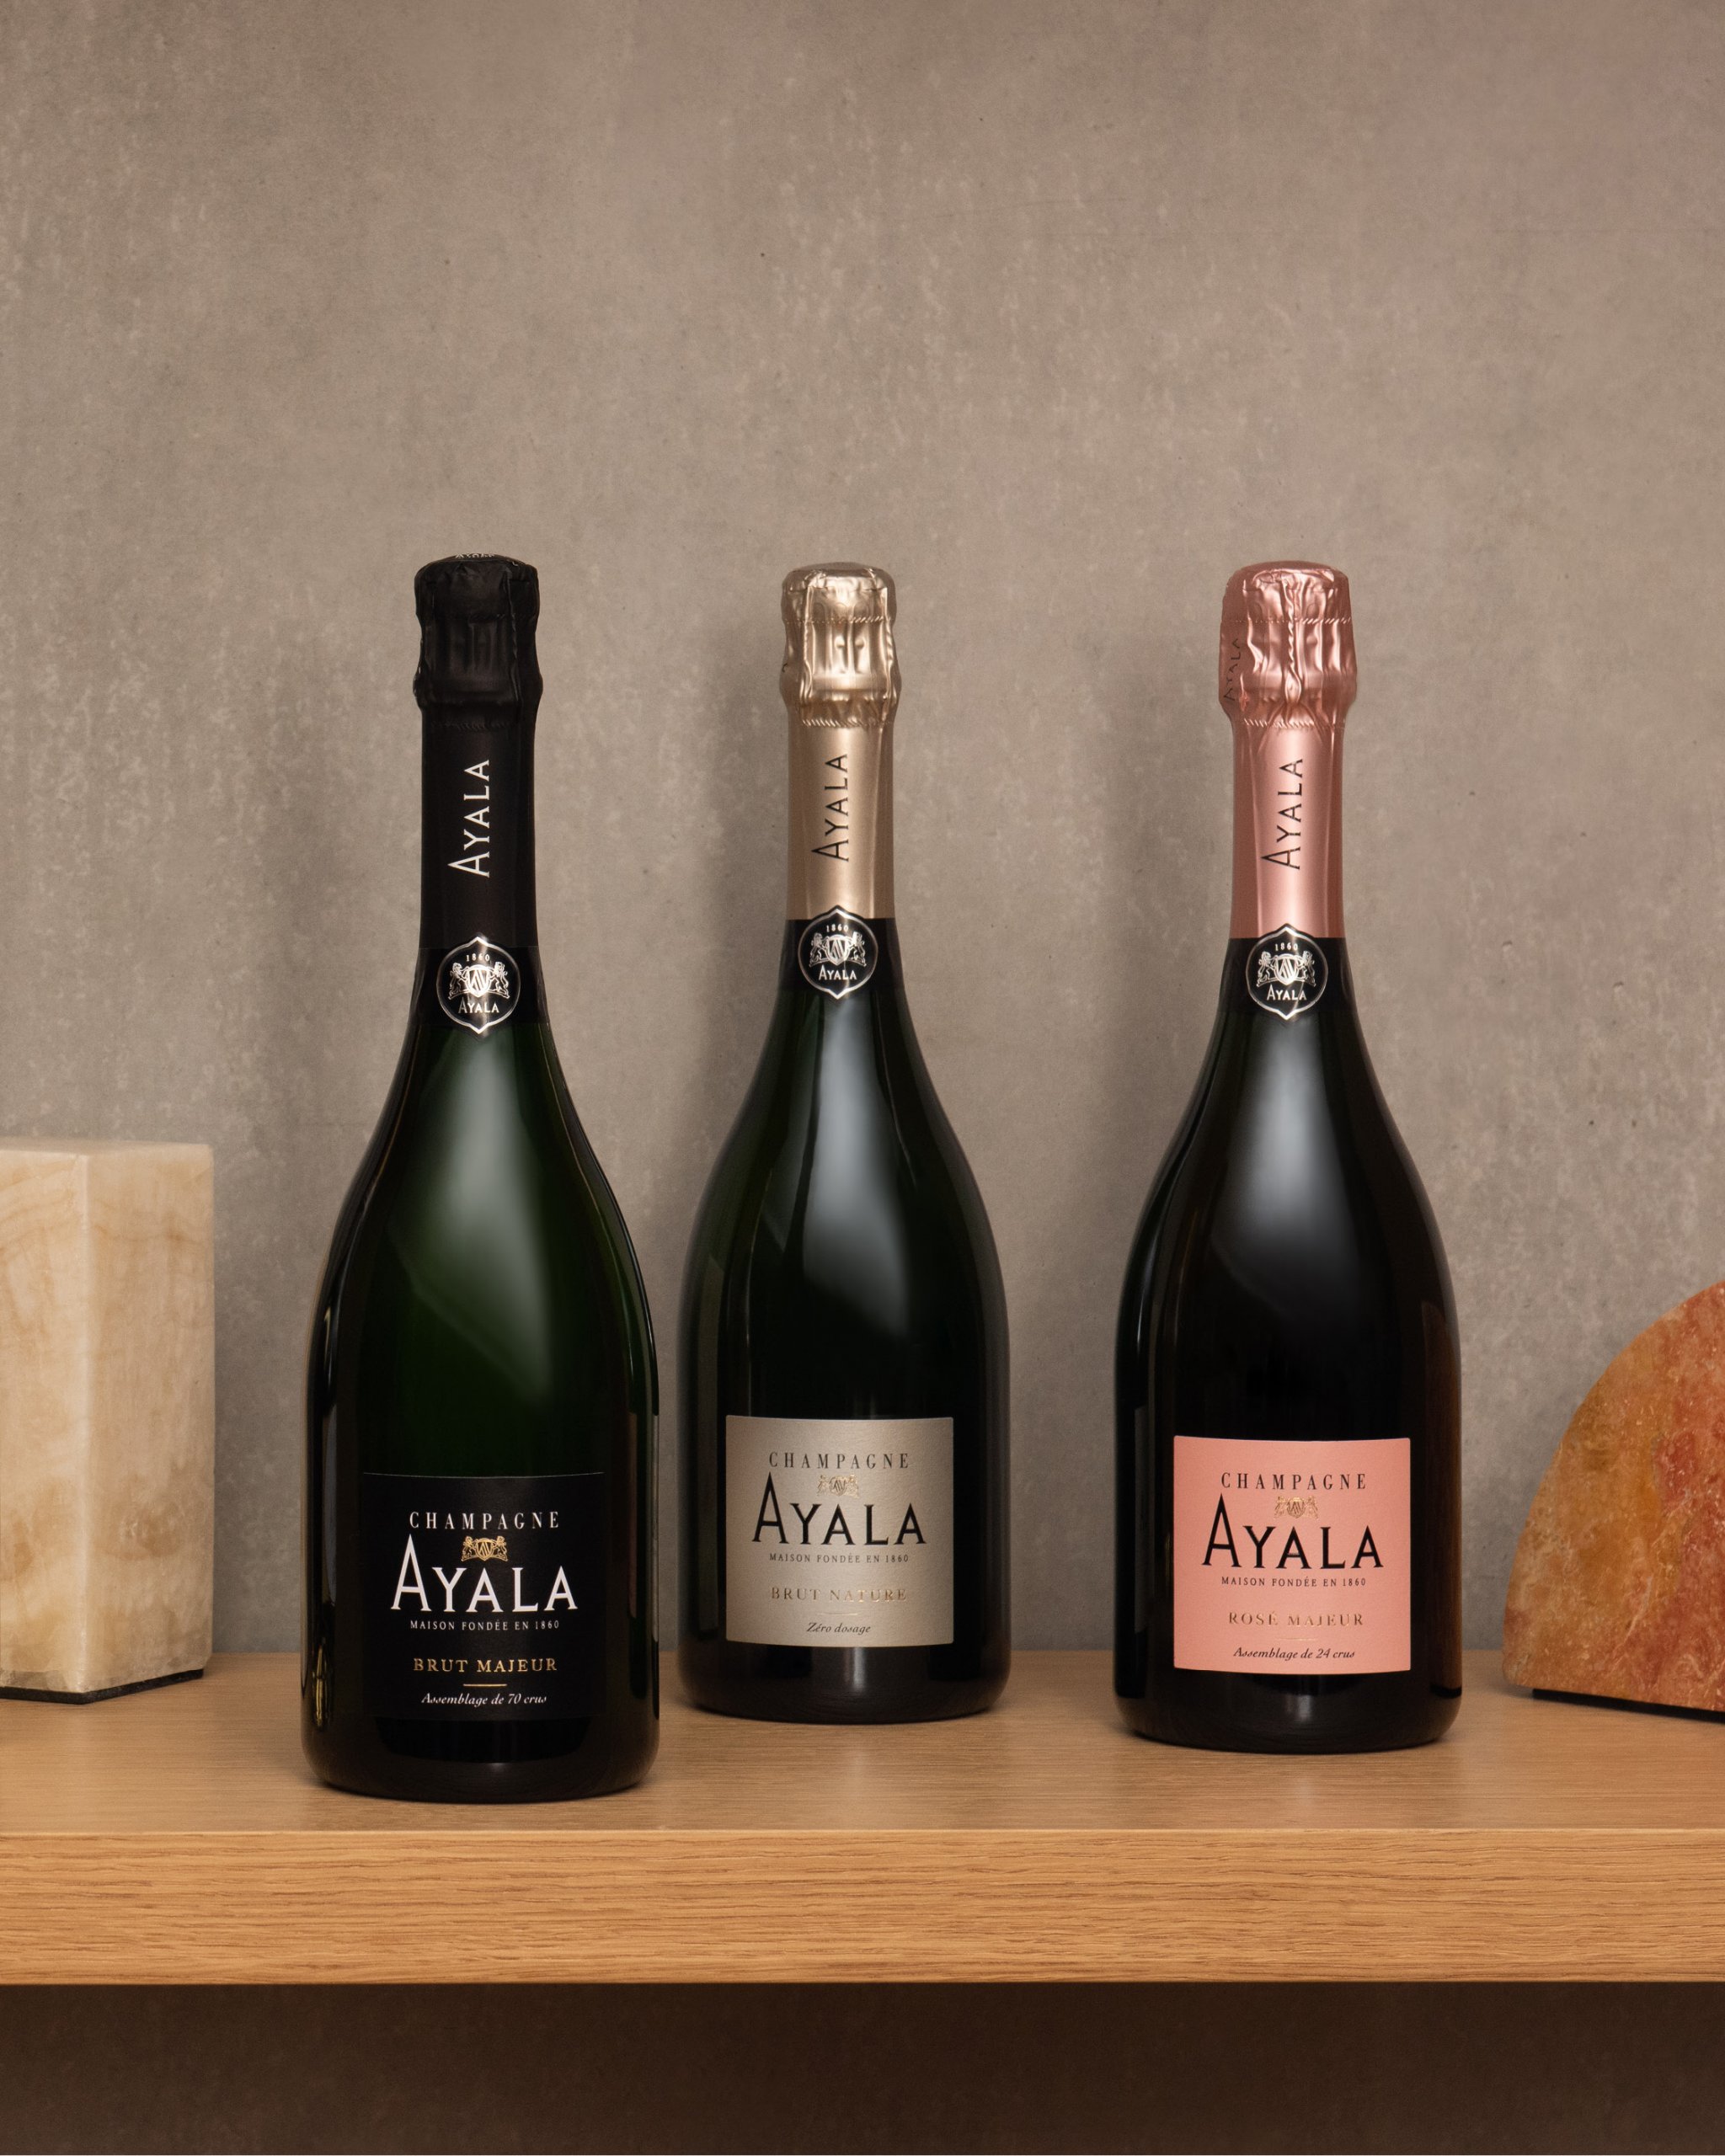 Introduction to the AYALA style - Champagne Ayala